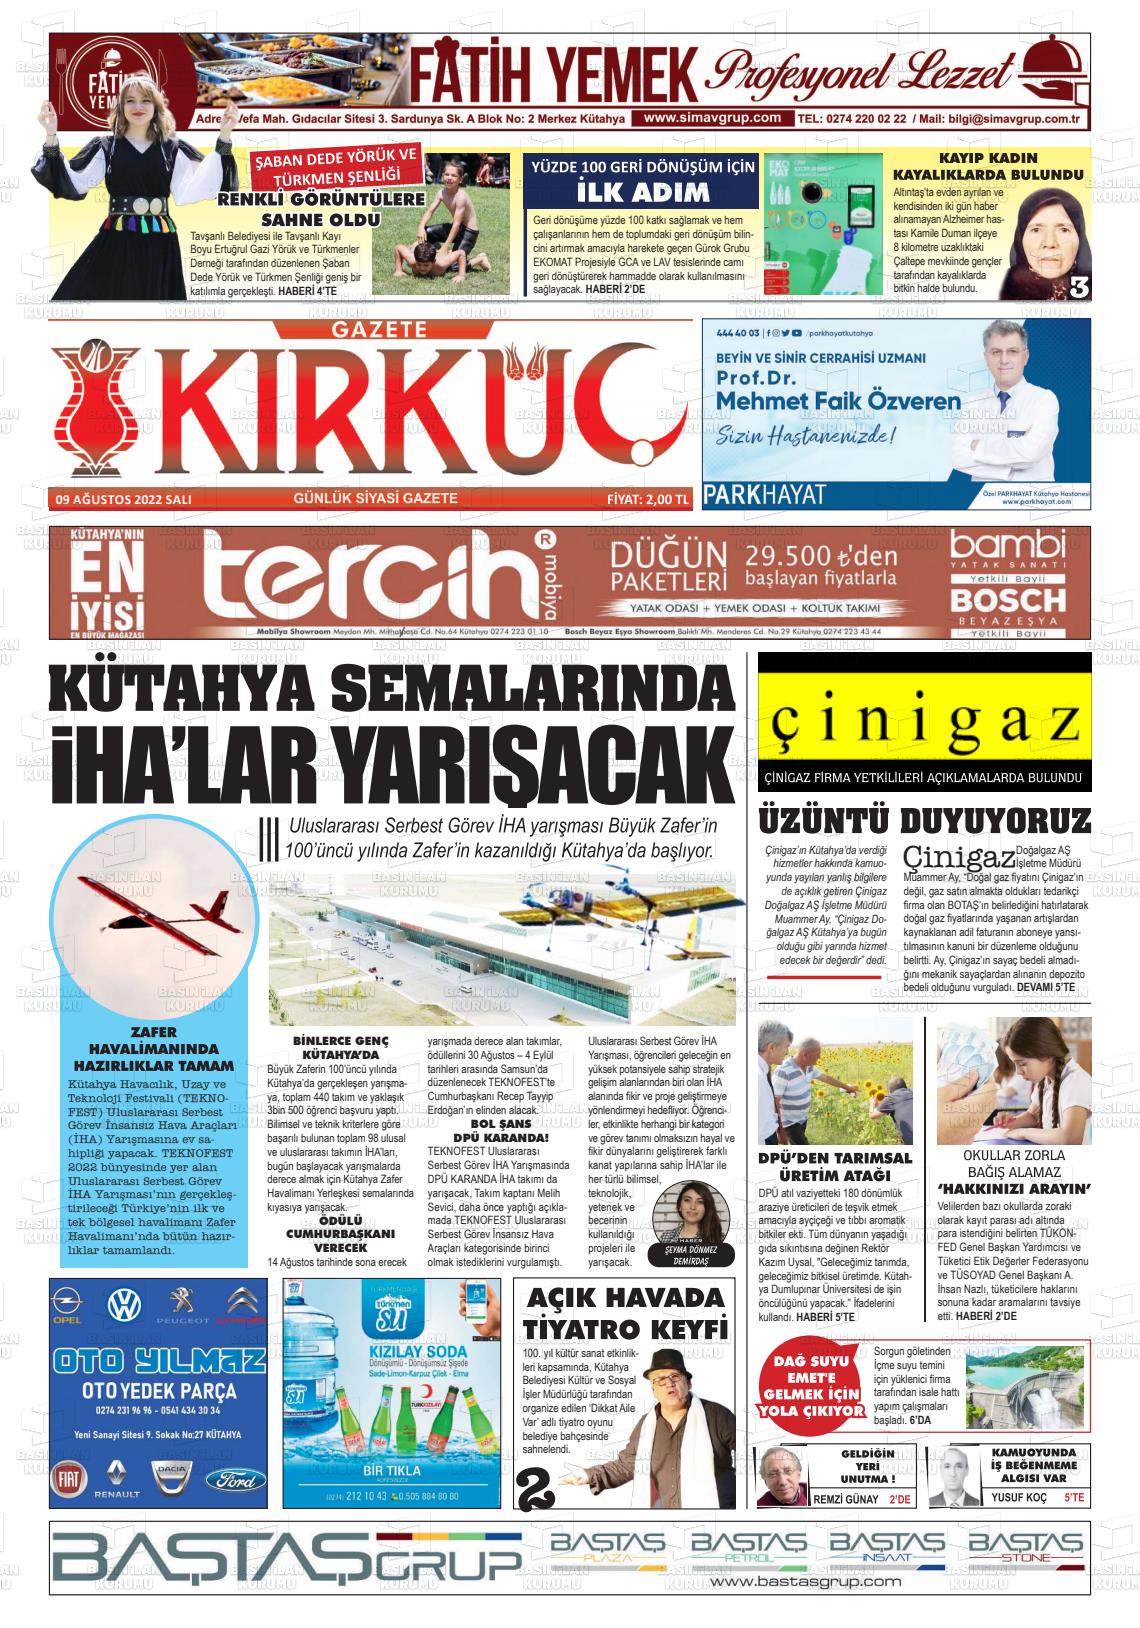 09 Ağustos 2022 Gazete Kırküç Gazete Manşeti